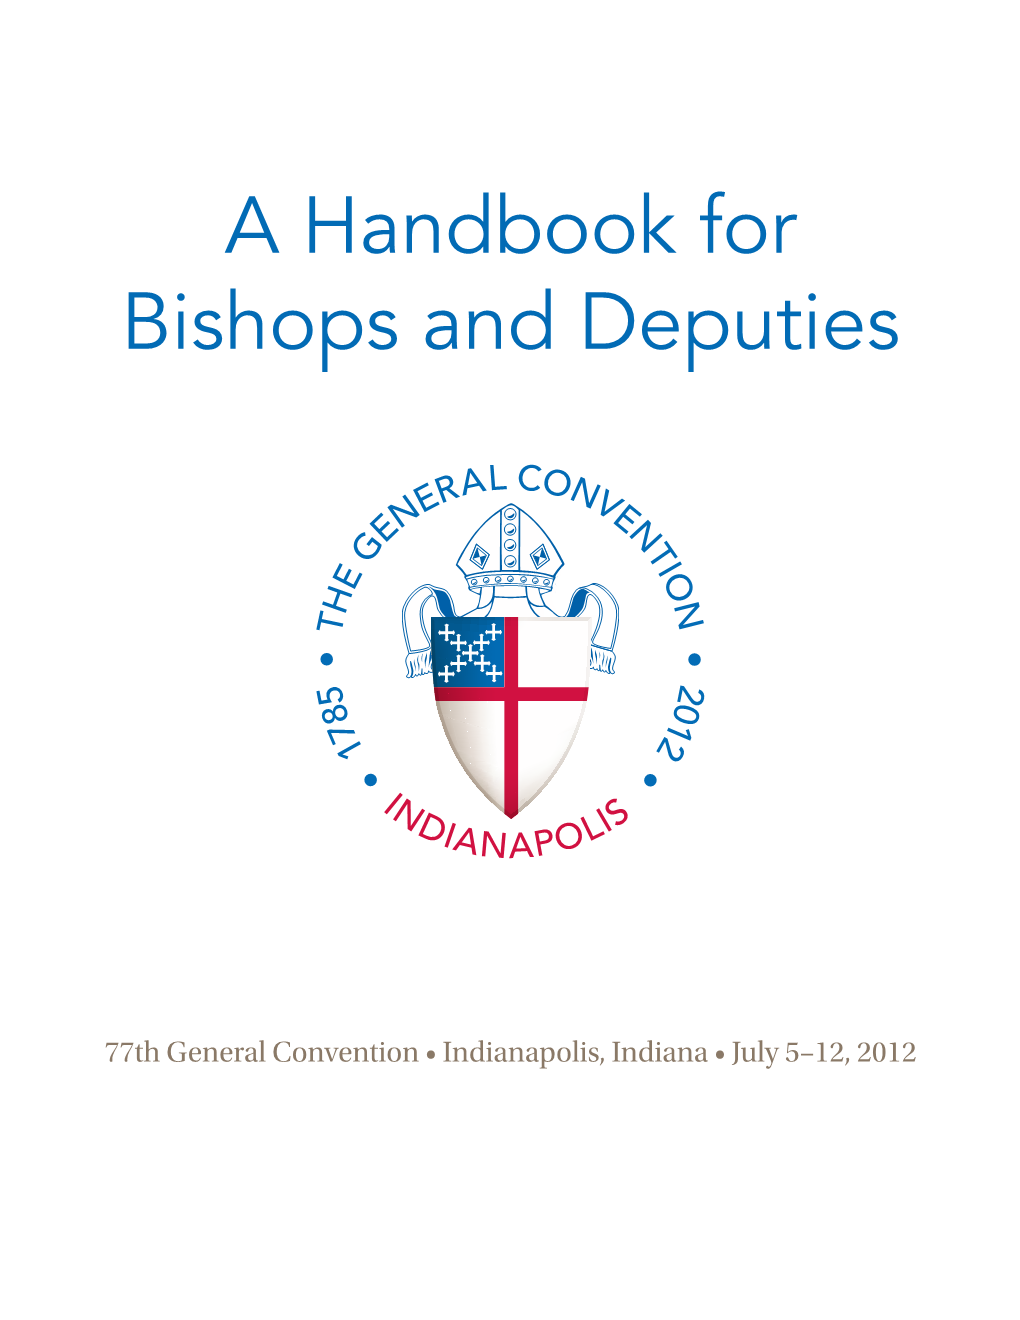 Bishop & Deputy Handbook